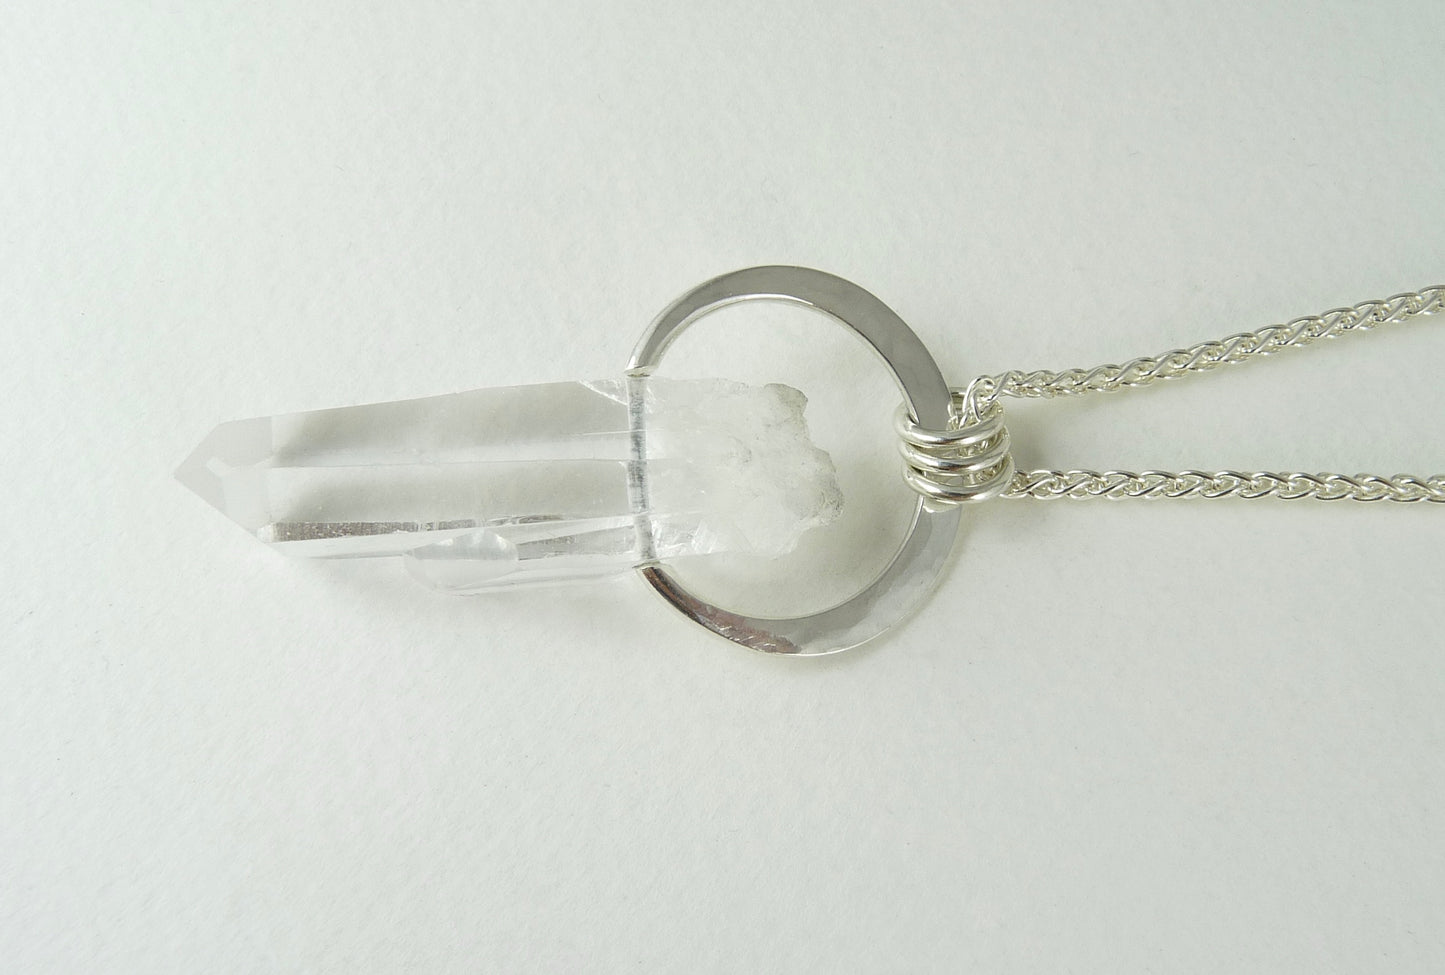 Delilah Quartz Crystal Long Necklace